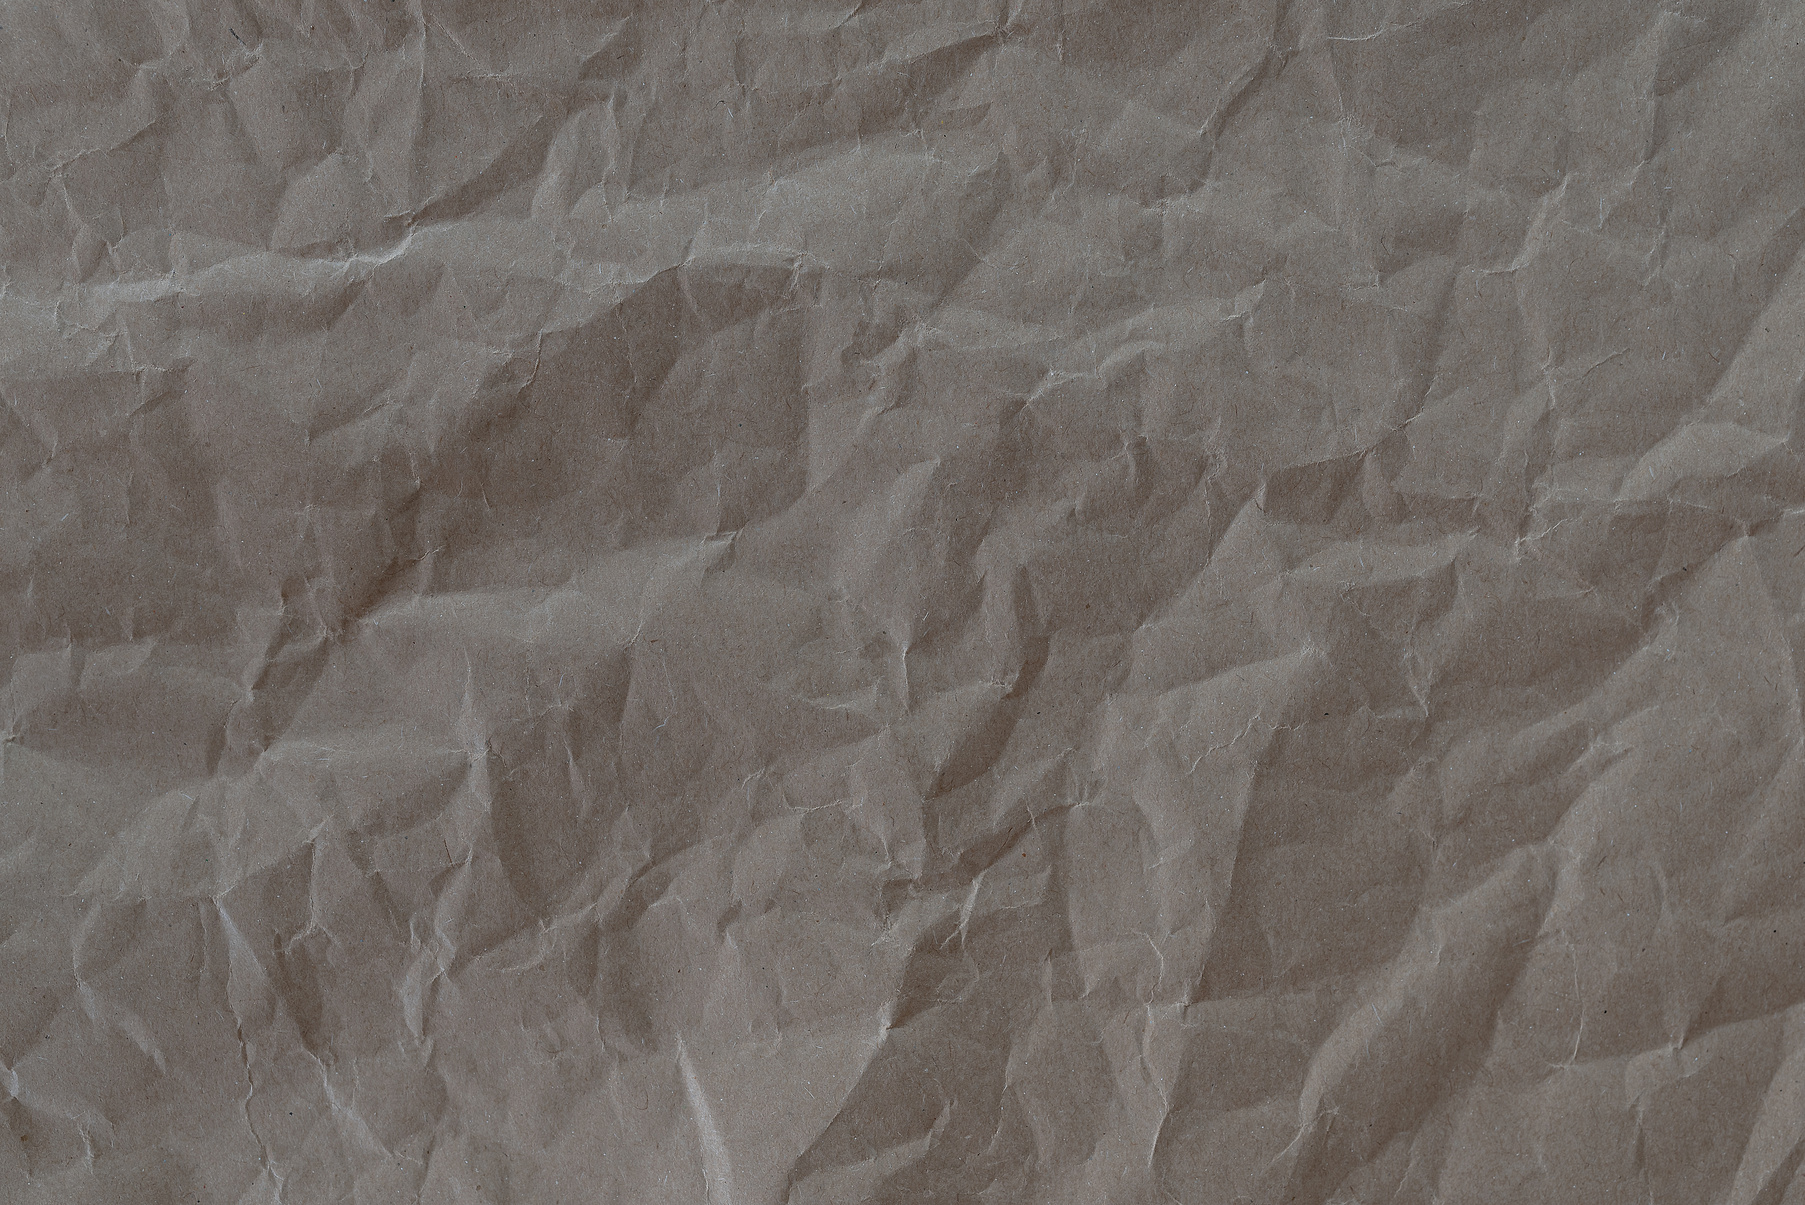 Crinkled Brown Paper Texture